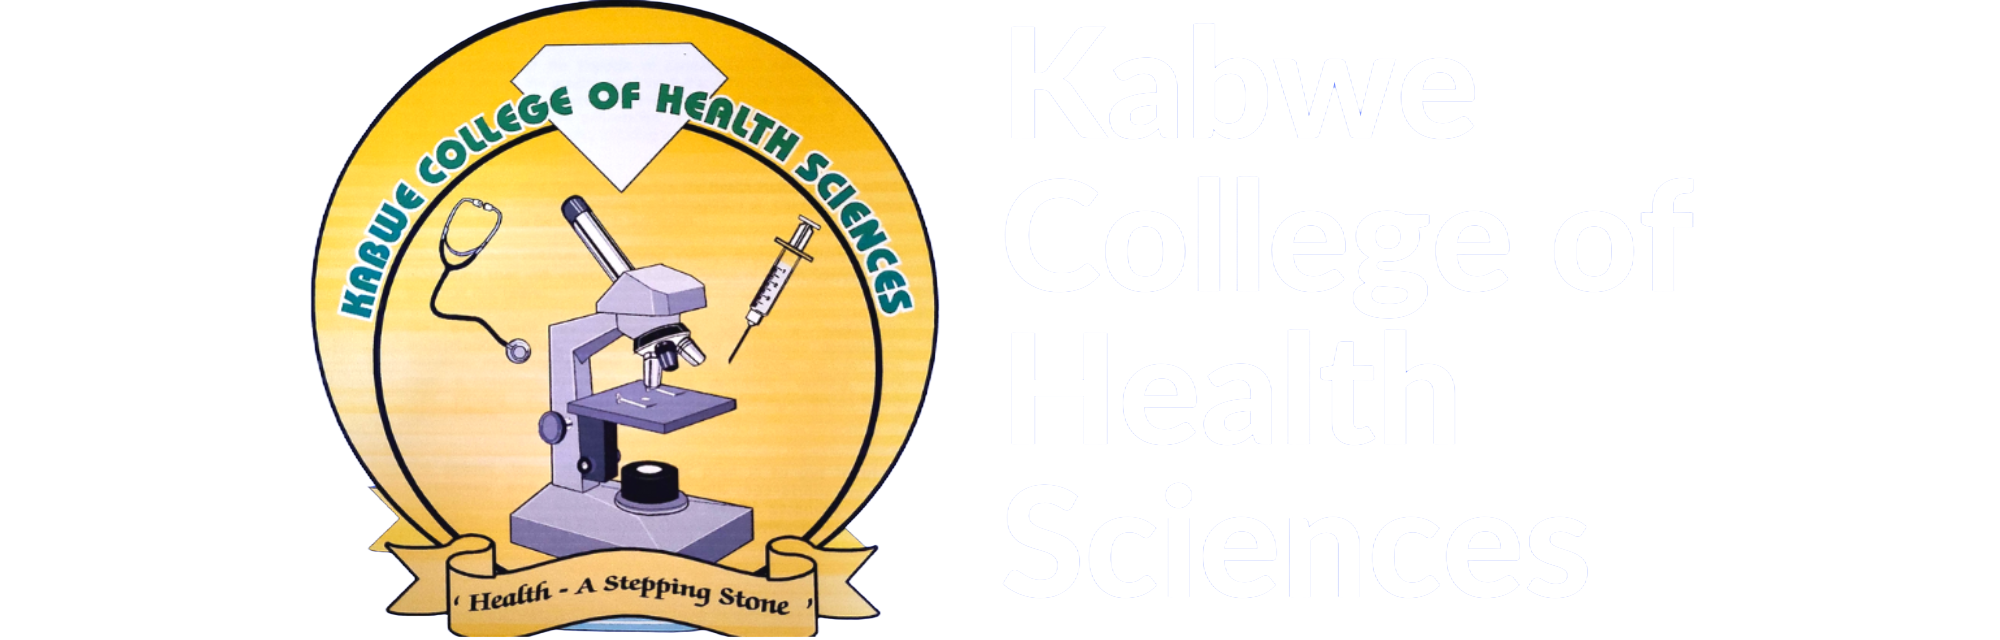 kabwe college of health sciences logo